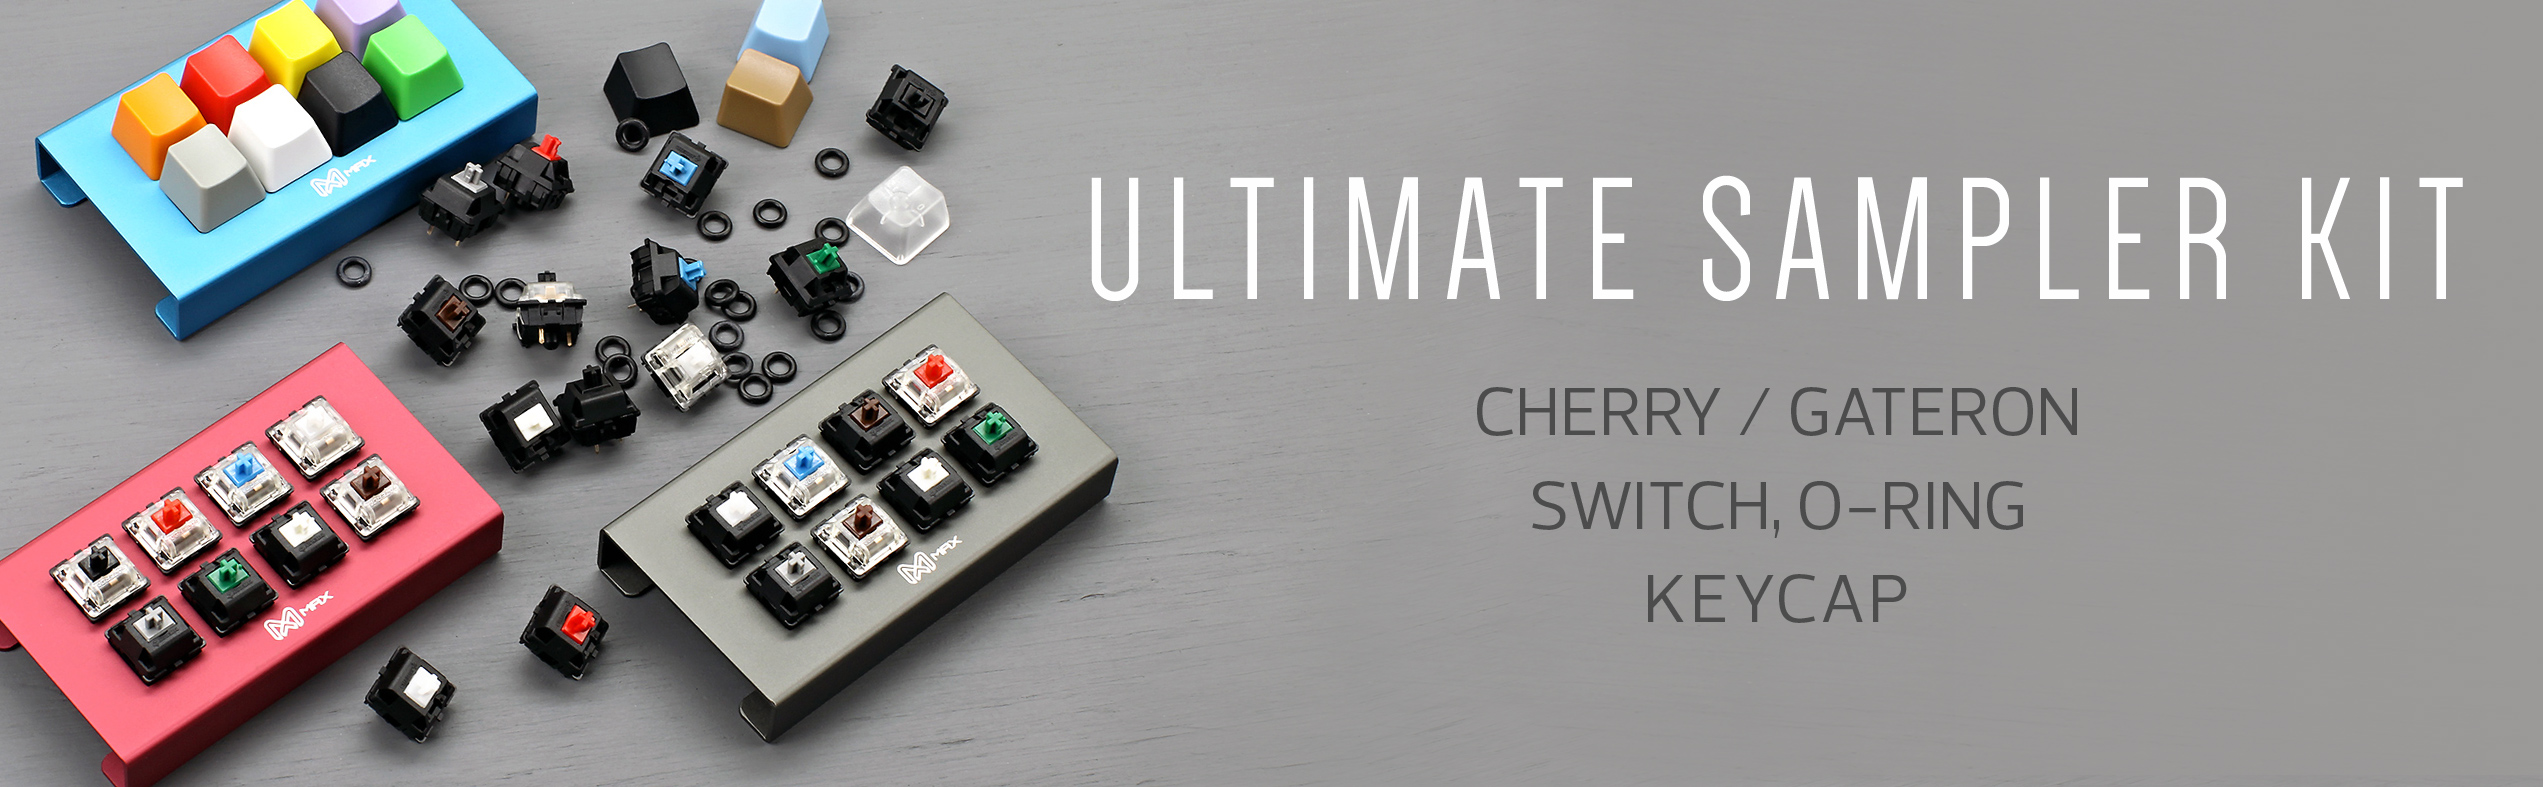 MAX Keyboard Keycap, Cherry MX Switch, Gateron Switch, O-Ring Ultimate Sampler Tester Kit